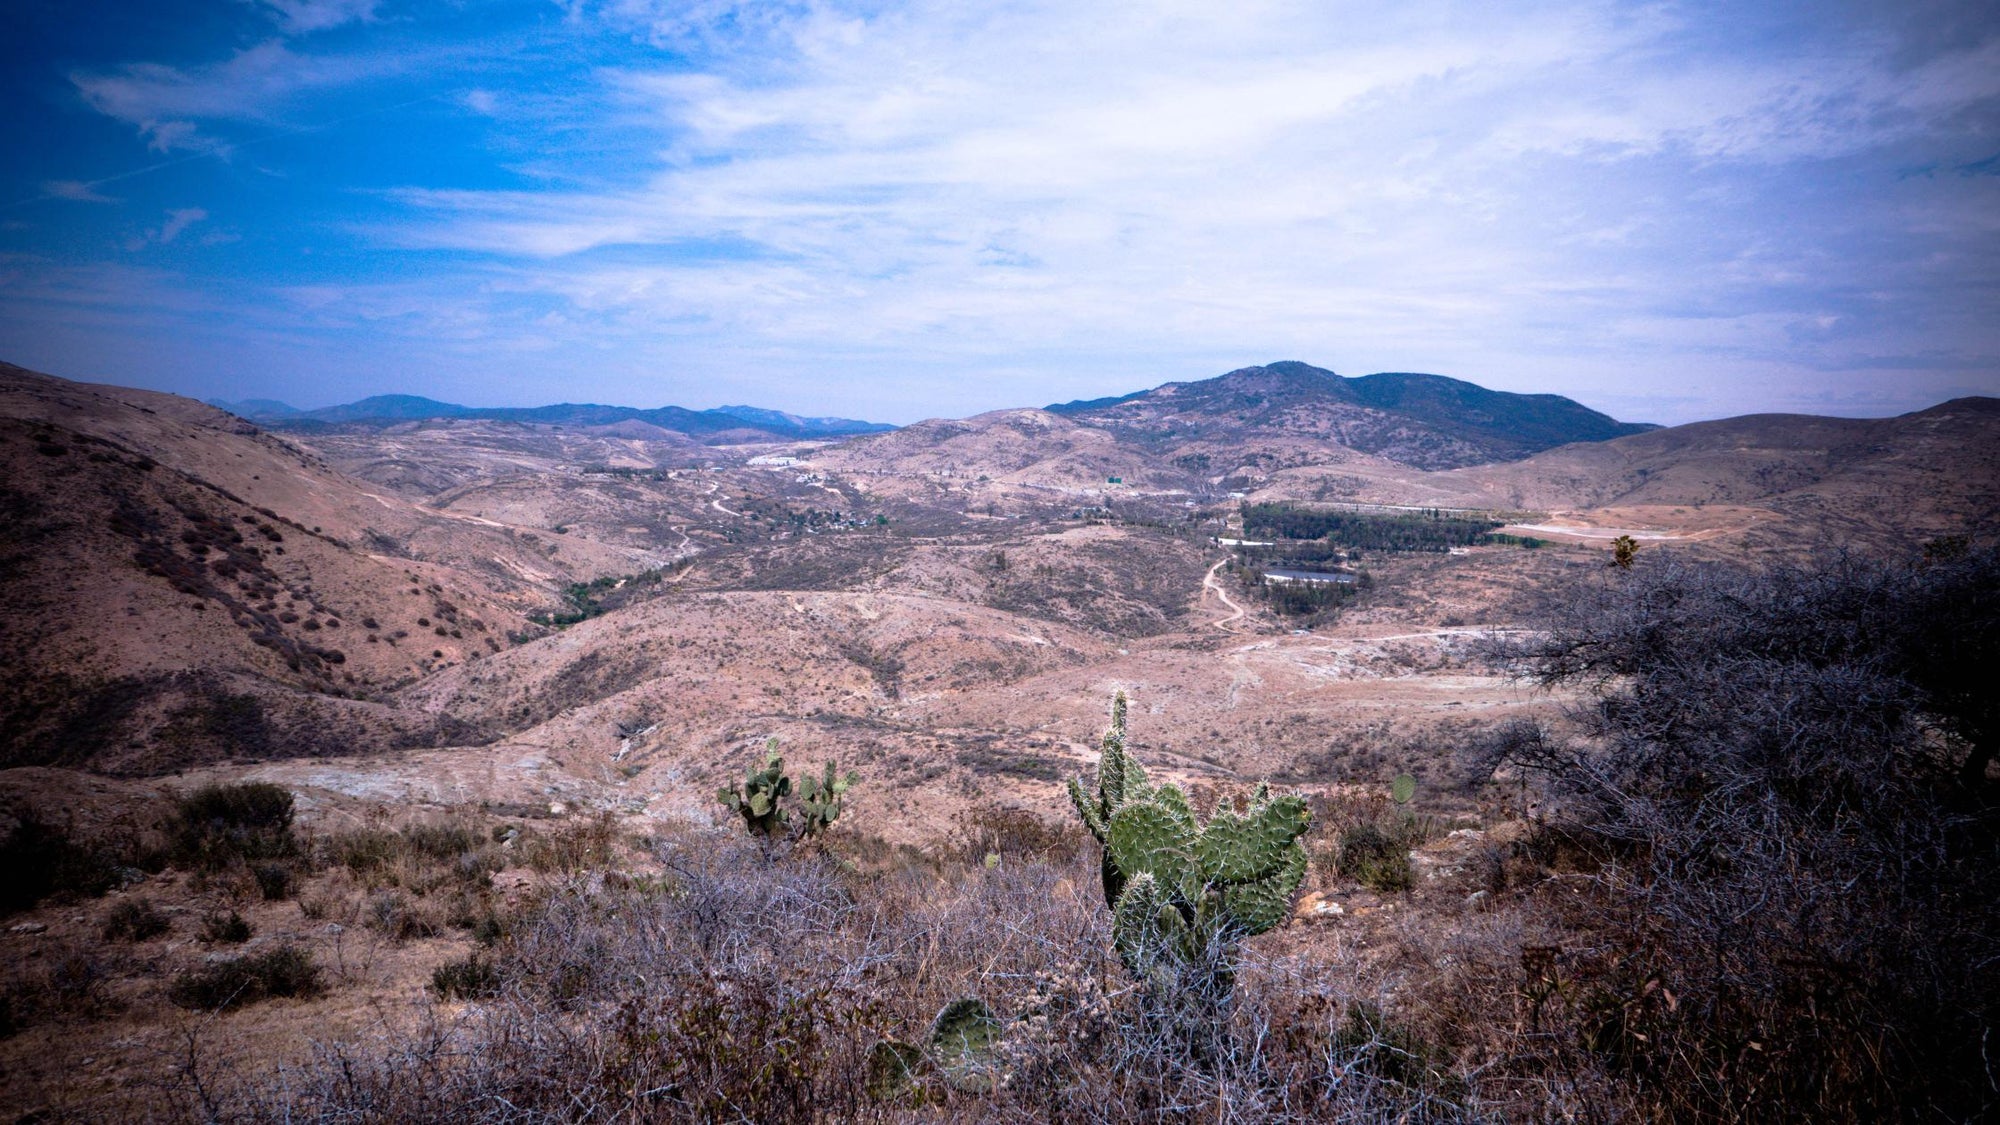 Mexico Guanajuato landscape with cactus and desert